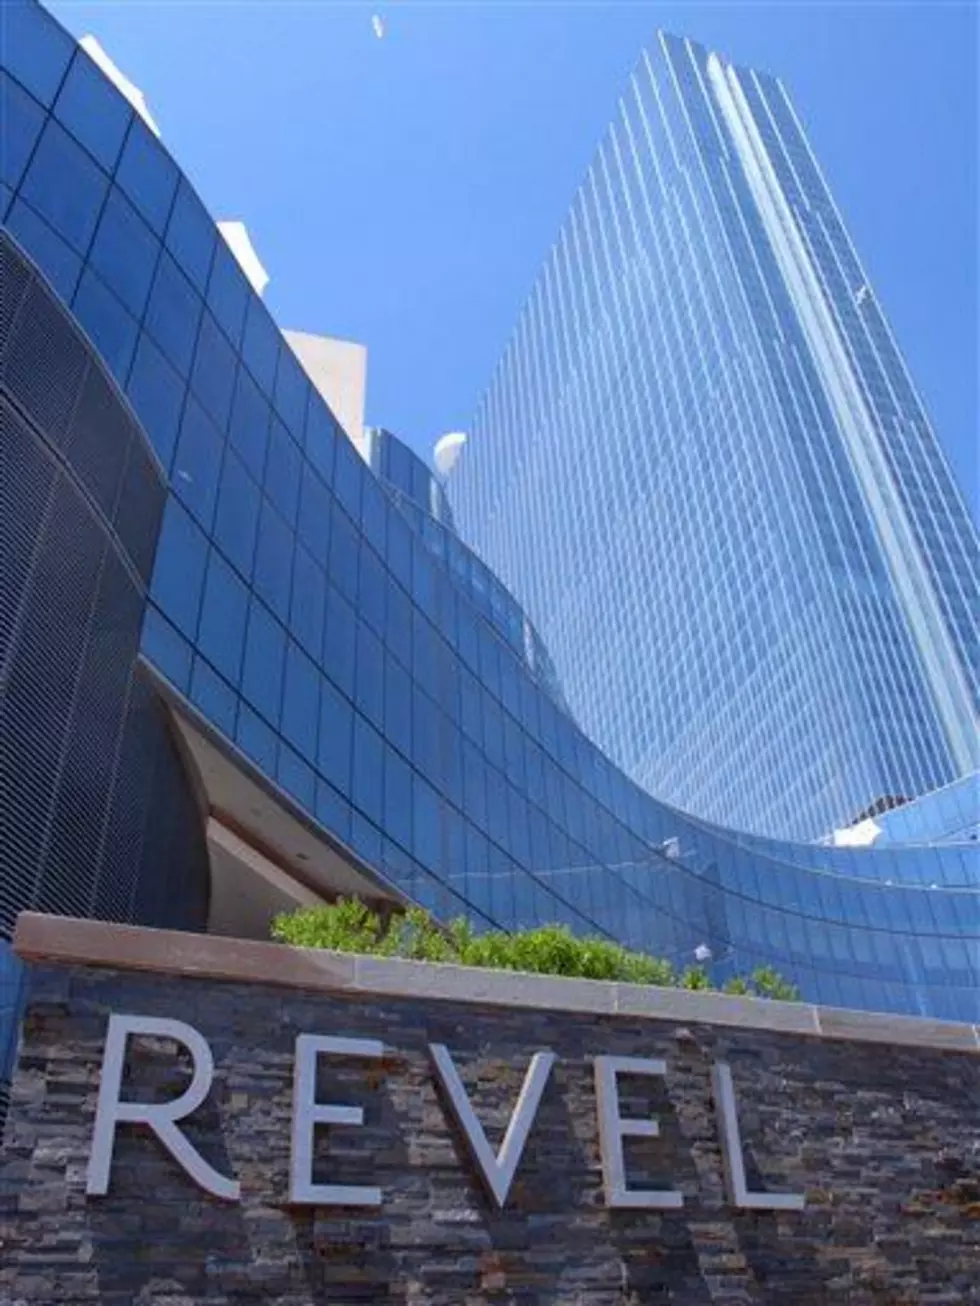 Revel Casino Hotel to judge: Still talking with potential bidders